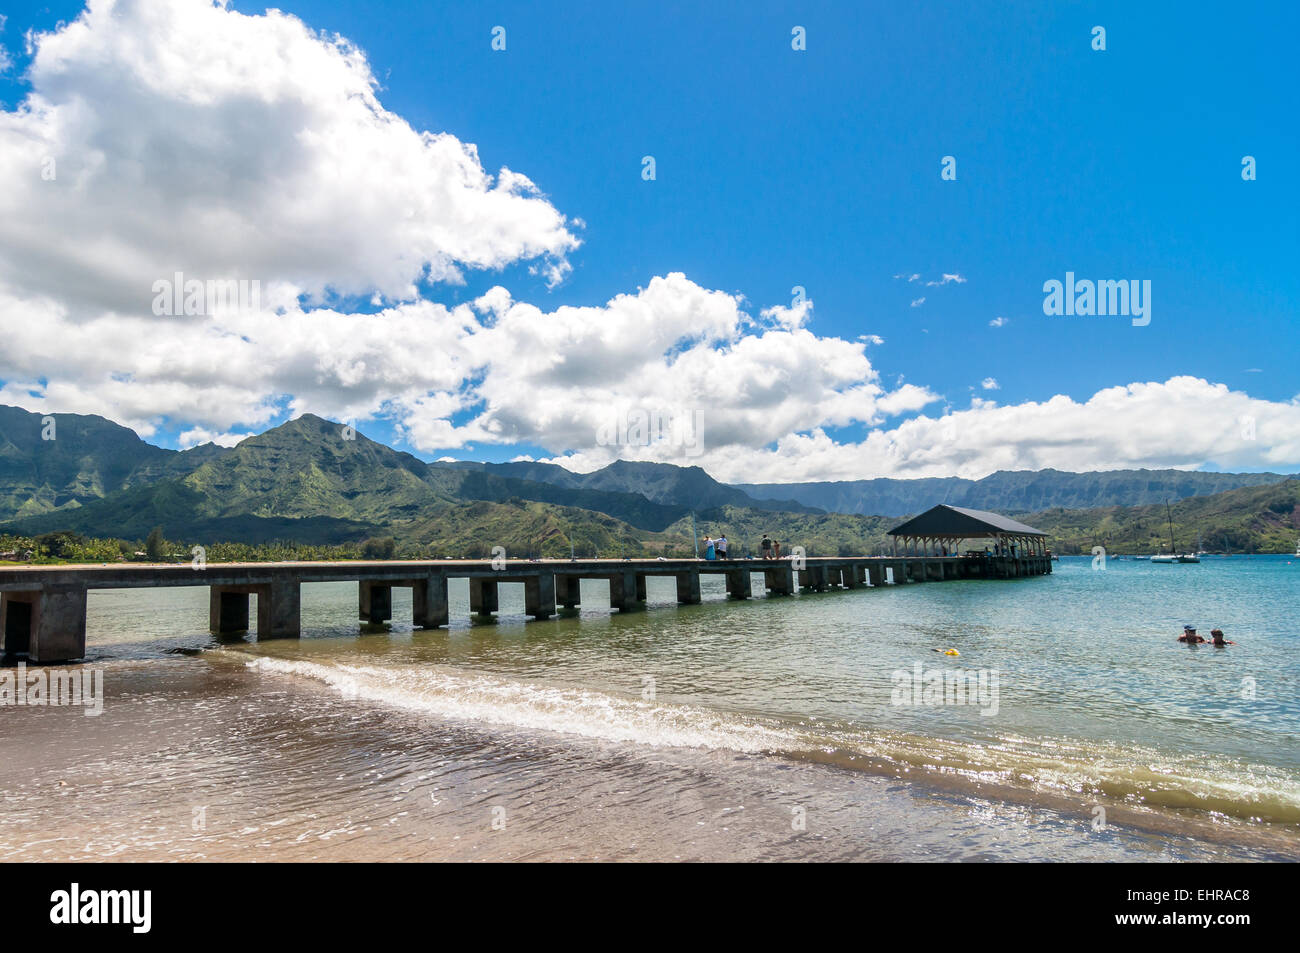 Kauai, HI, USA - August 31, 2013: tourists on Pier and bathing in Hanalei Bay, Kauai Island (Hawaii) Stock Photo